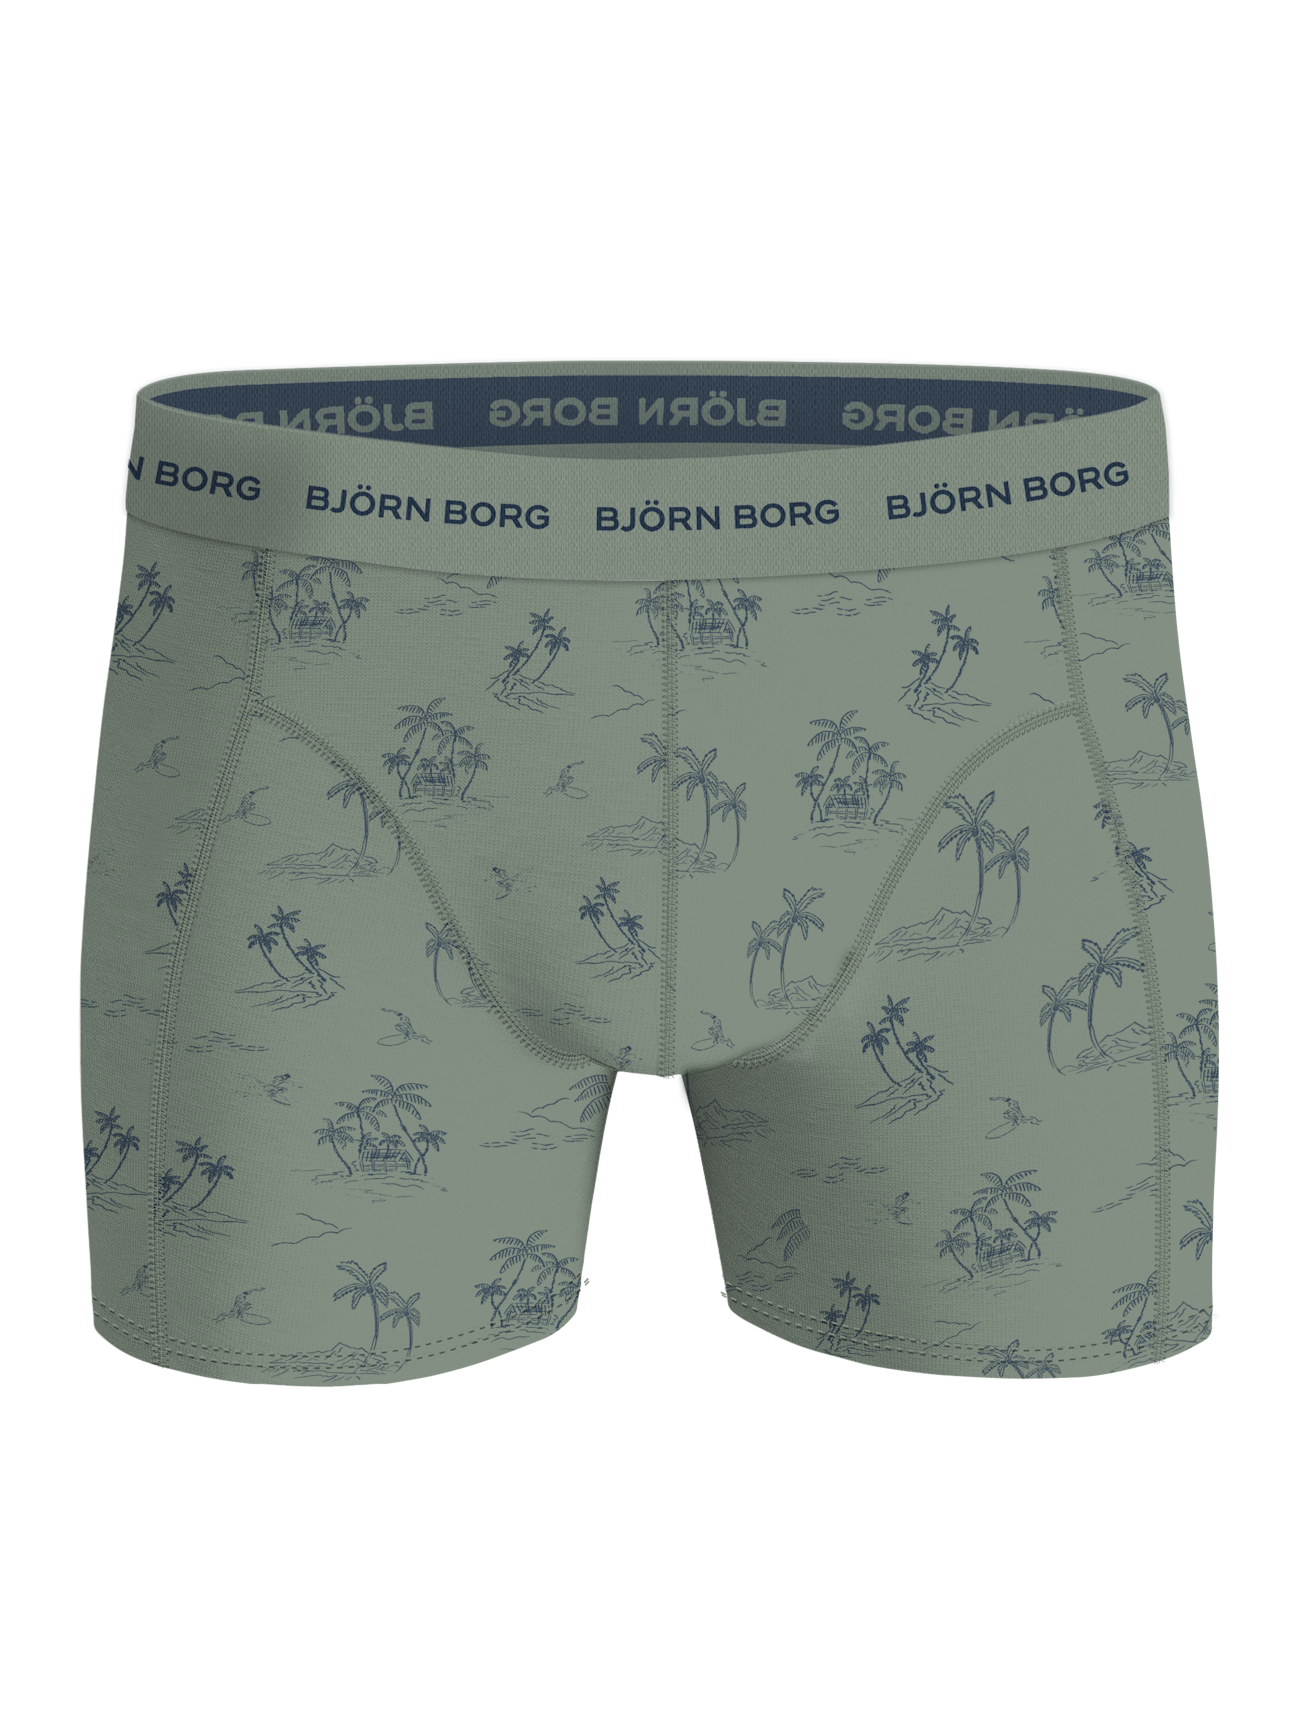 2 3 5 10 15 Lot Bjorn Borg Cotton Stretch Men Underwear Boxer Brief size  XS-2X